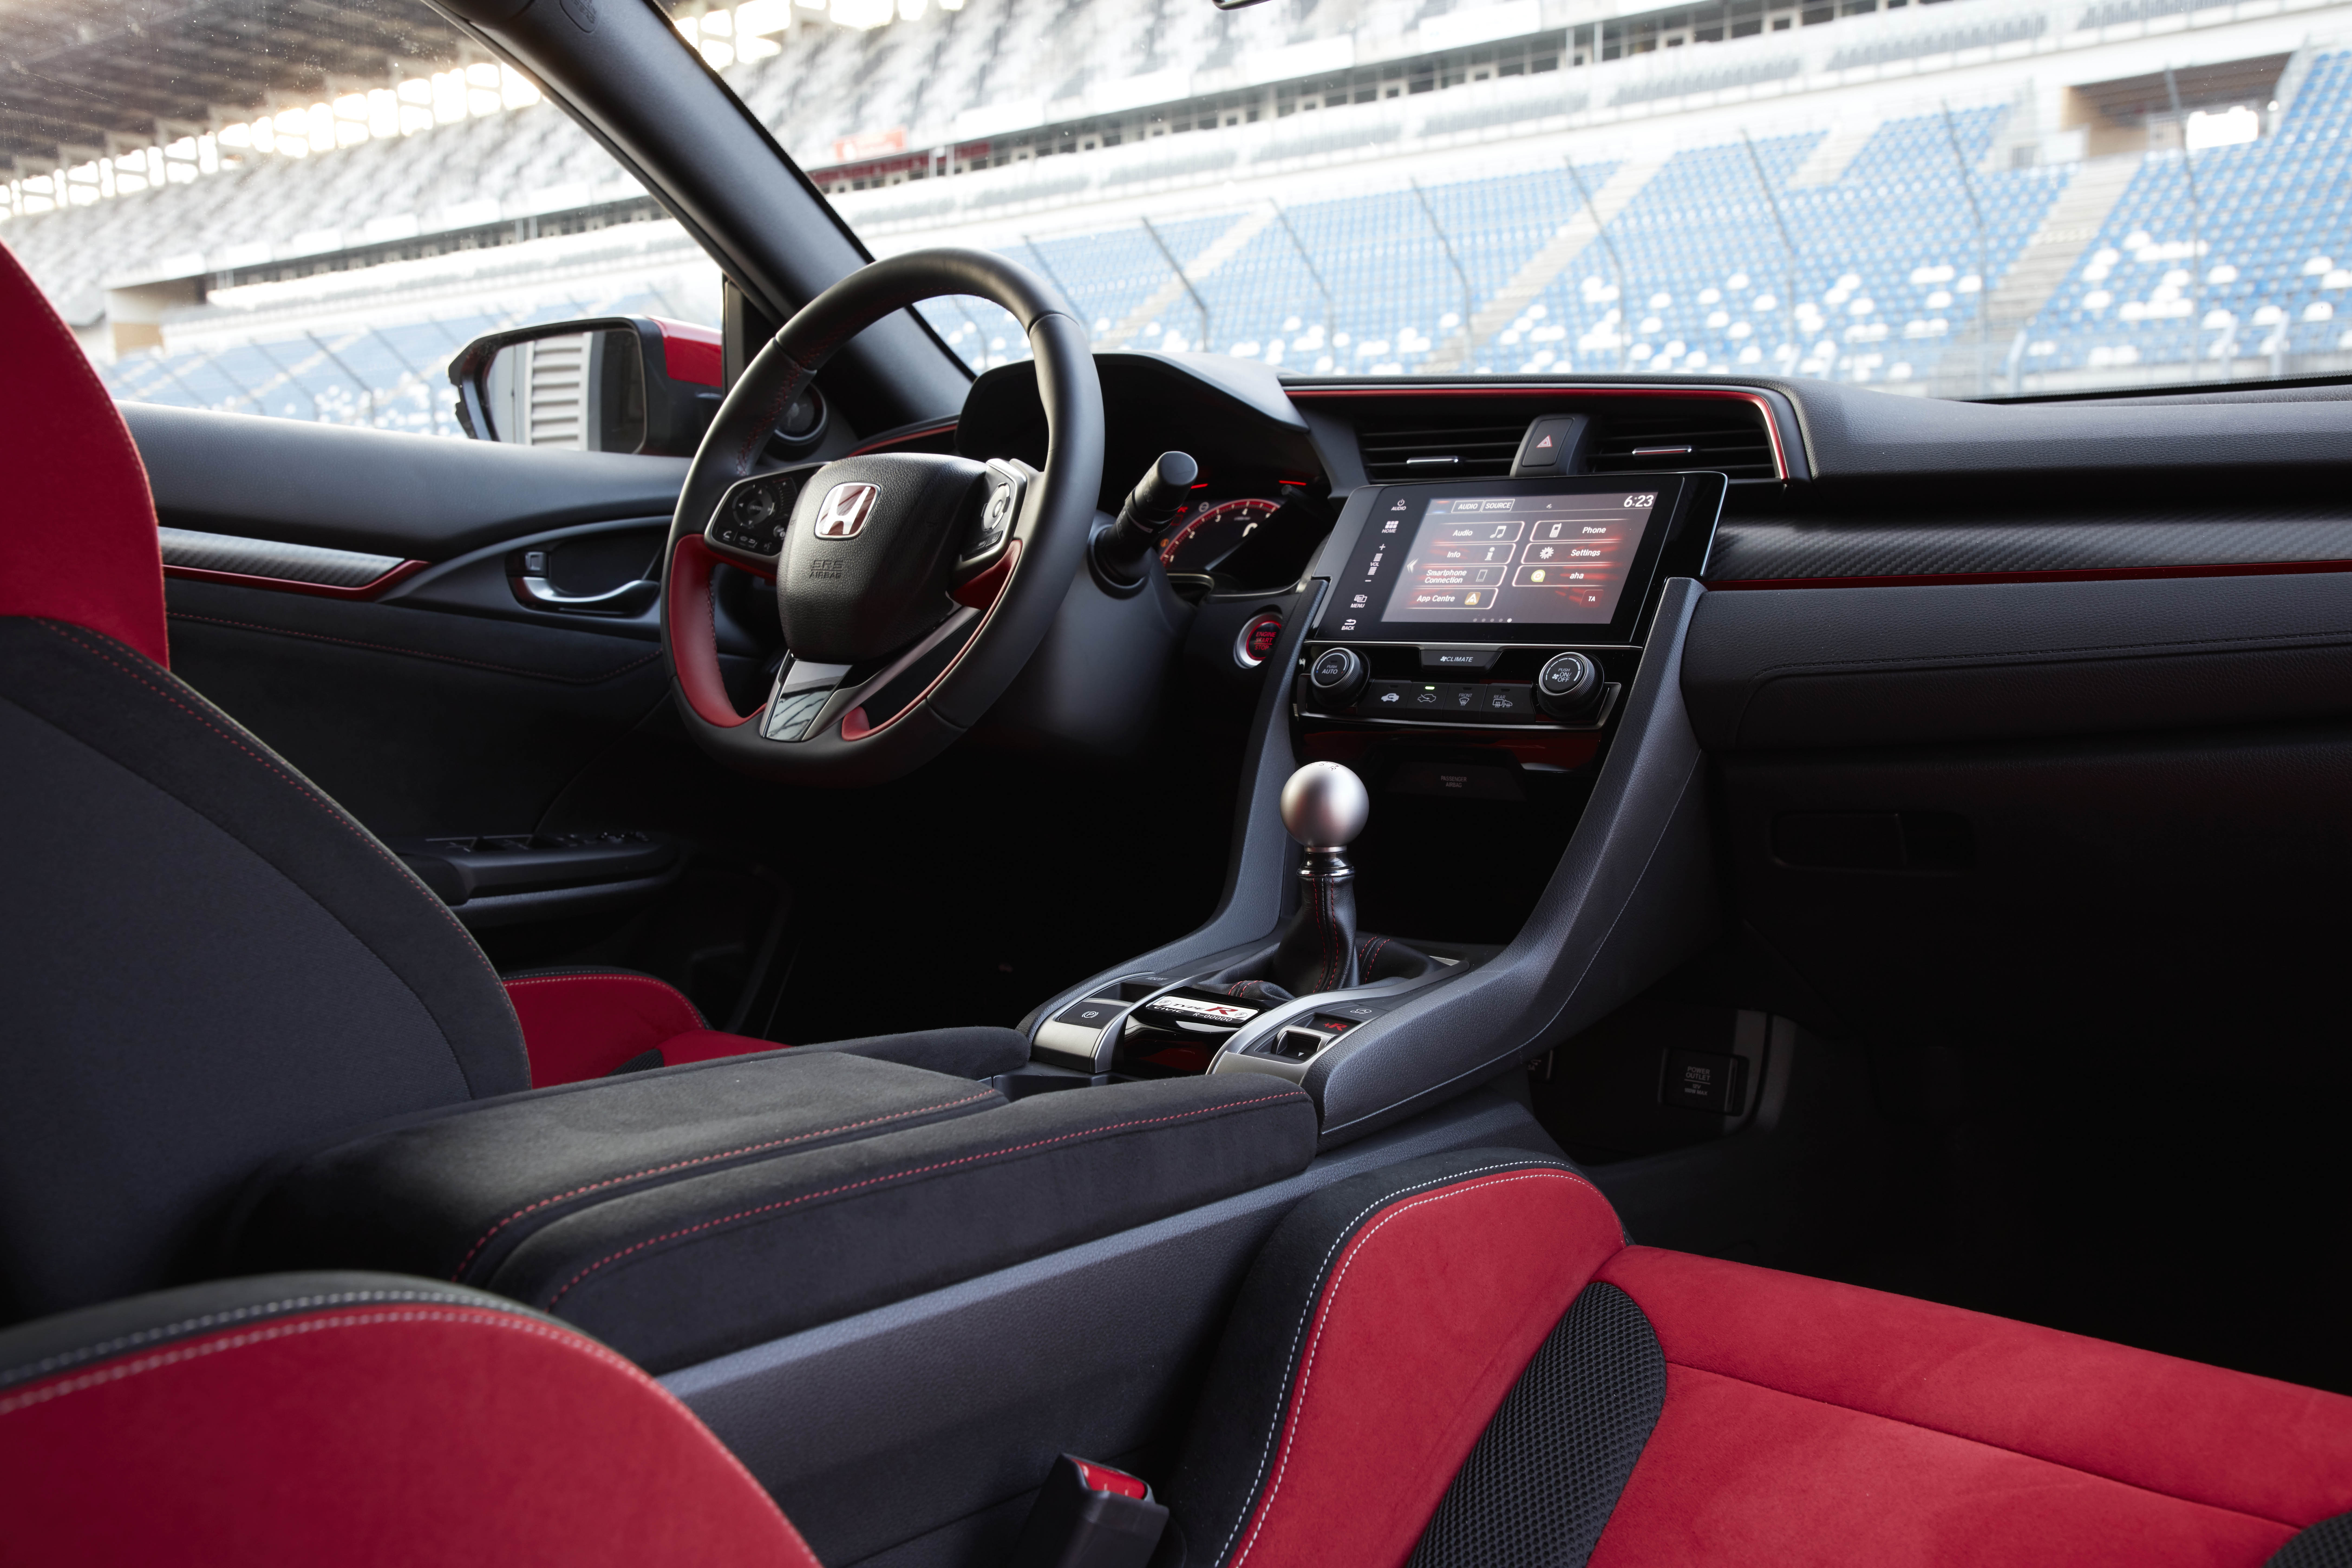 Honda Civic Type R interior specifications